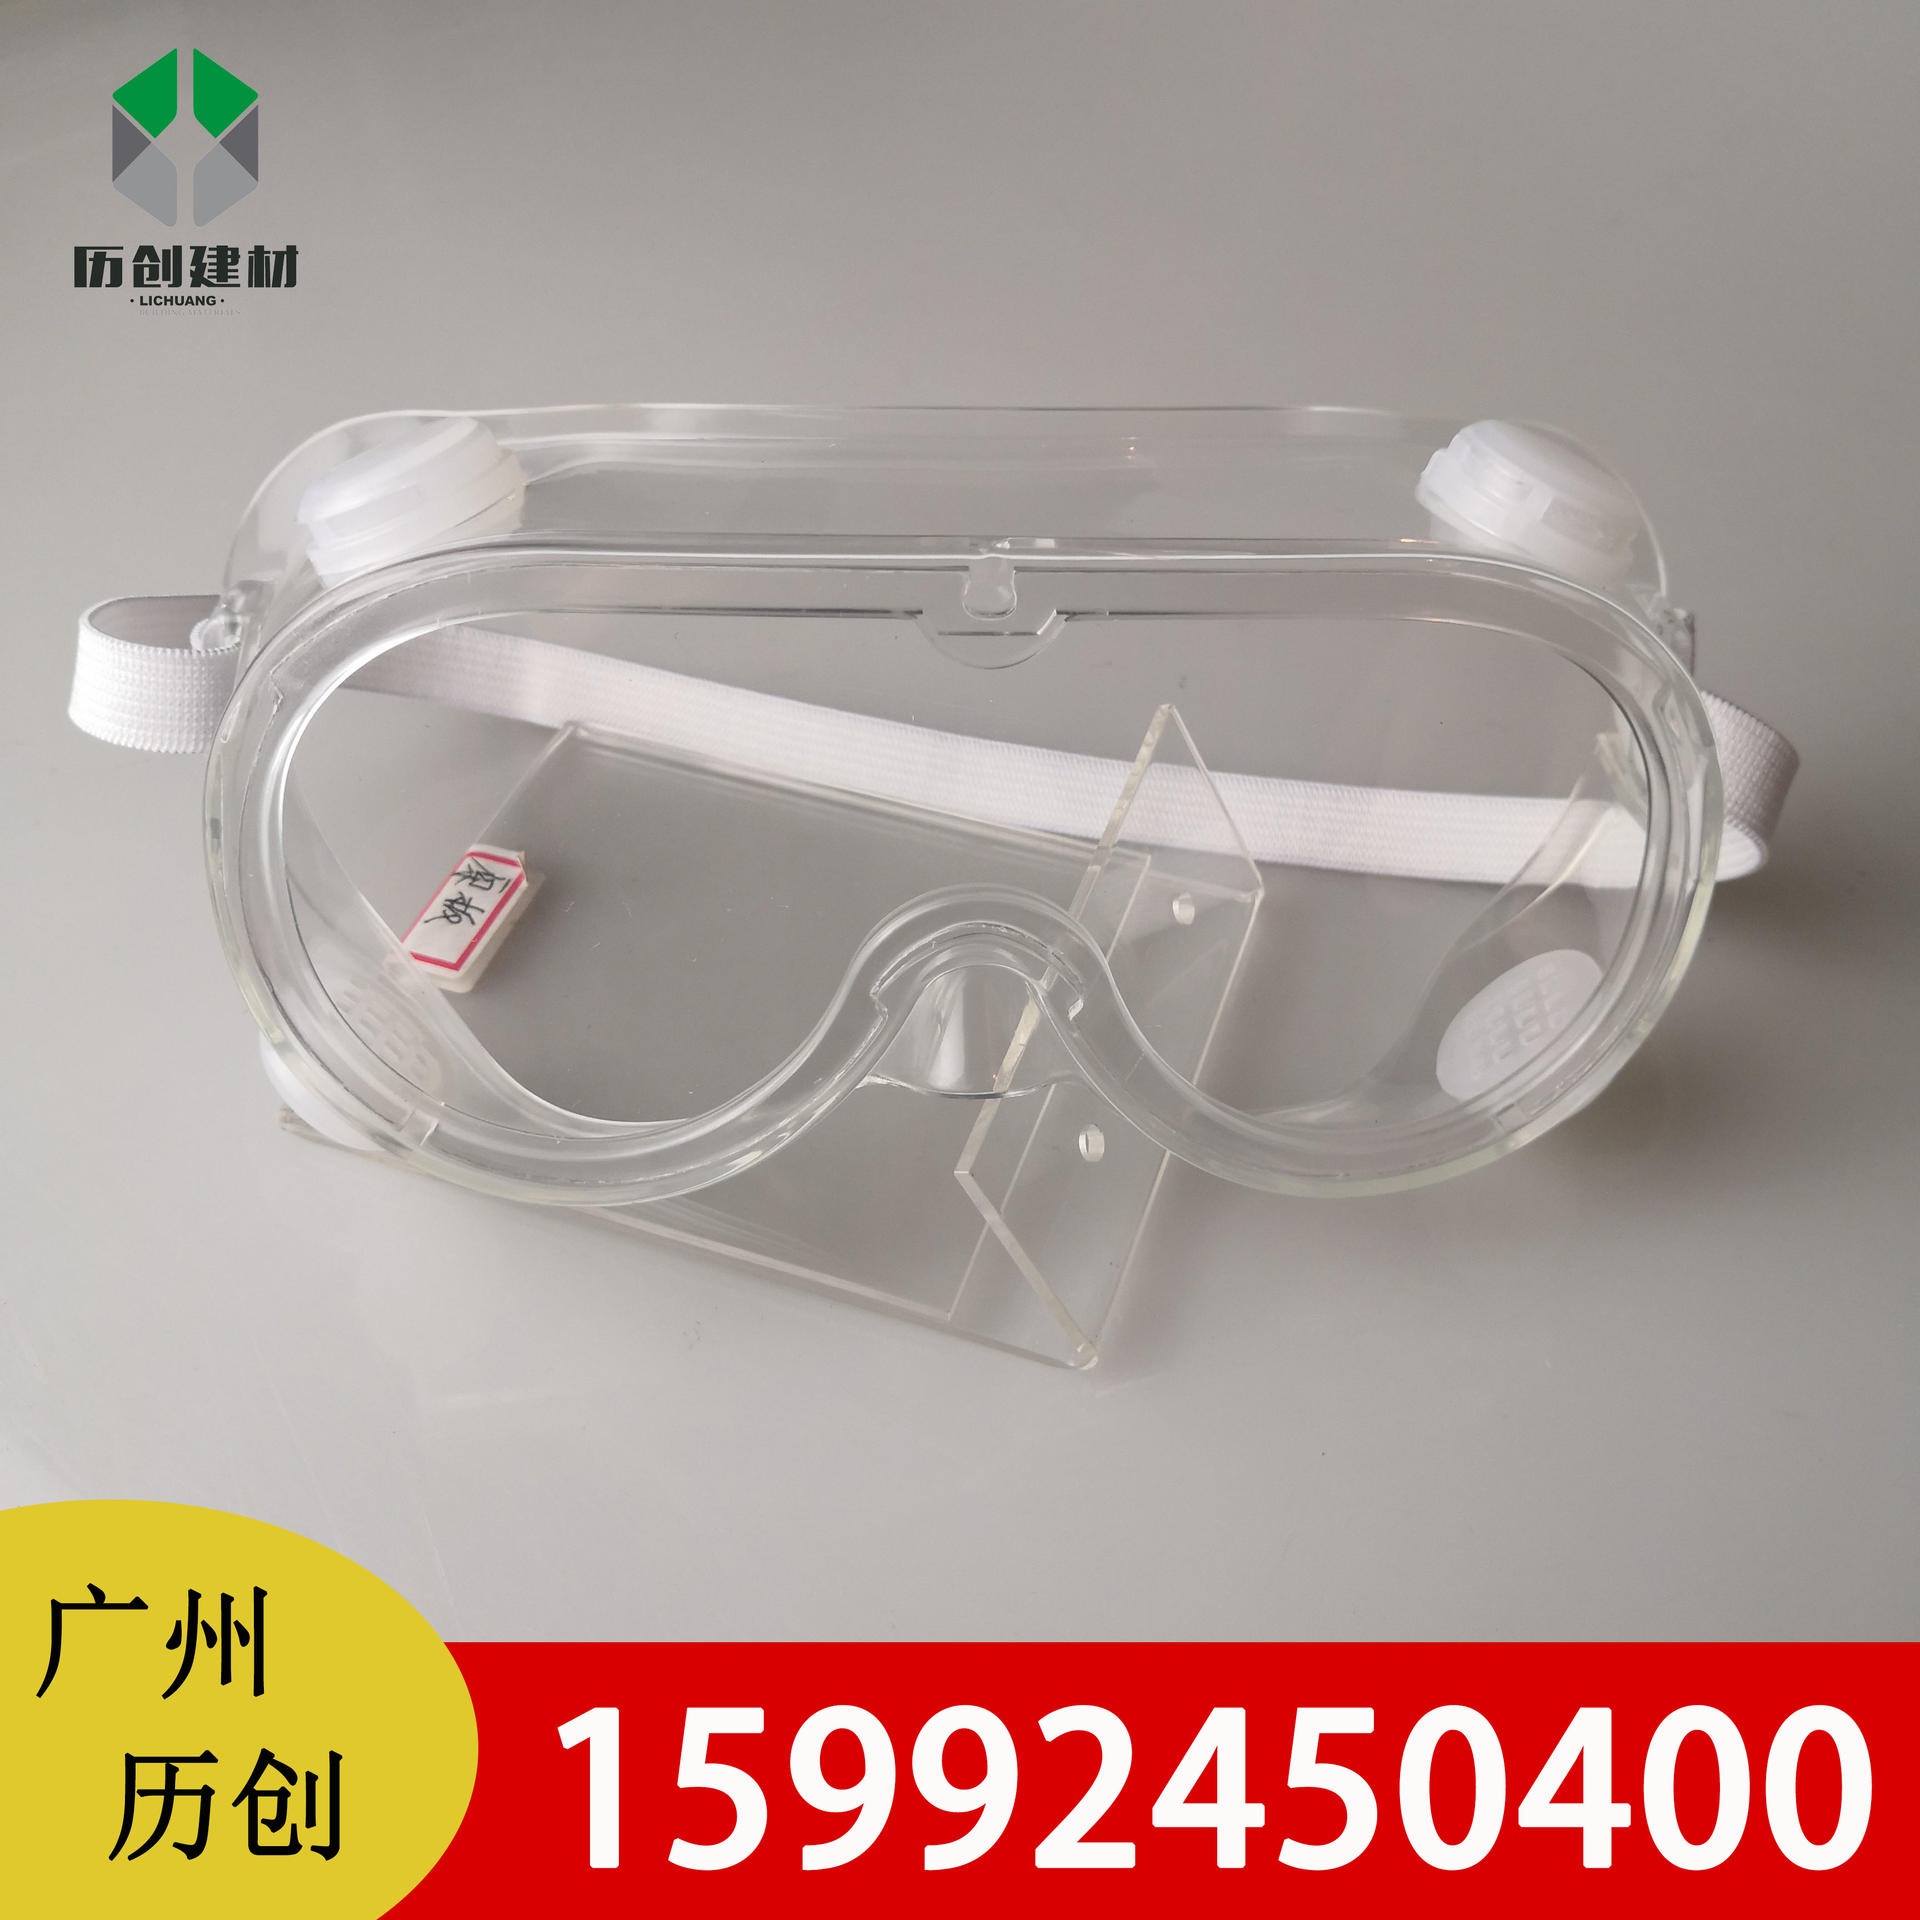 pc防雾加工 广州 PC防雾板材 防护面罩 护目镜 透明视窗 隔离眼罩 pc防雾板医用专用